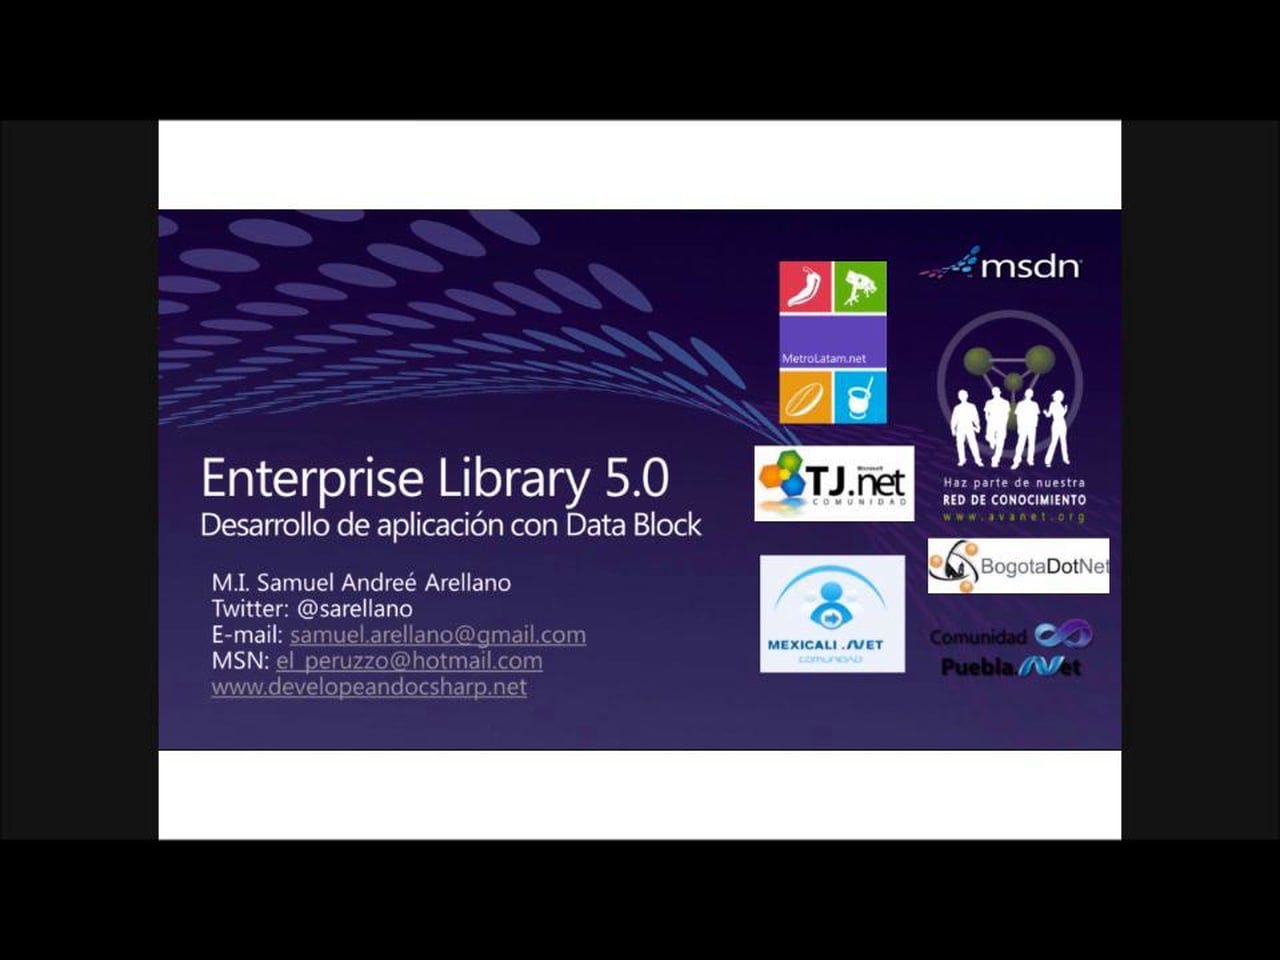 Enterprise Library 5.0